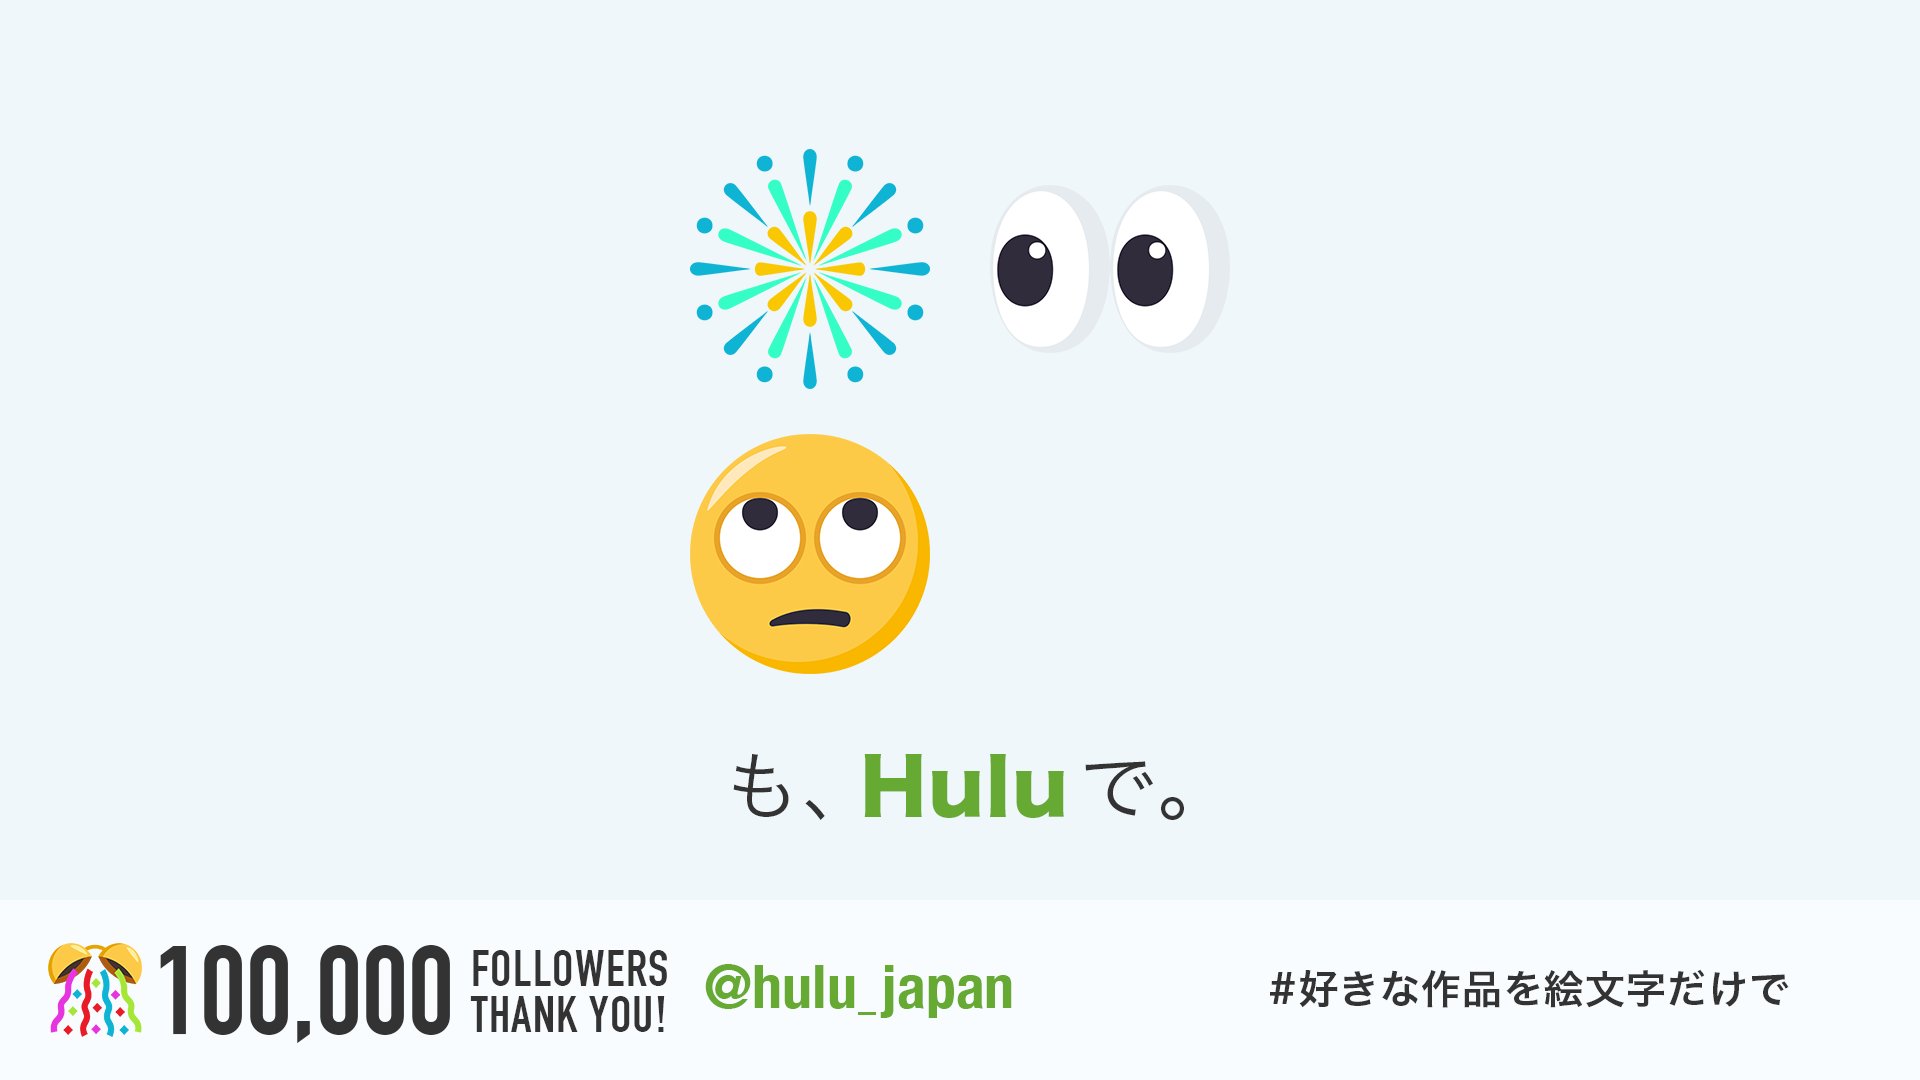 Hulu Japan 好きな作品を絵文字だけで わかったらrt T Co 4gdx1qbmb8 Twitter